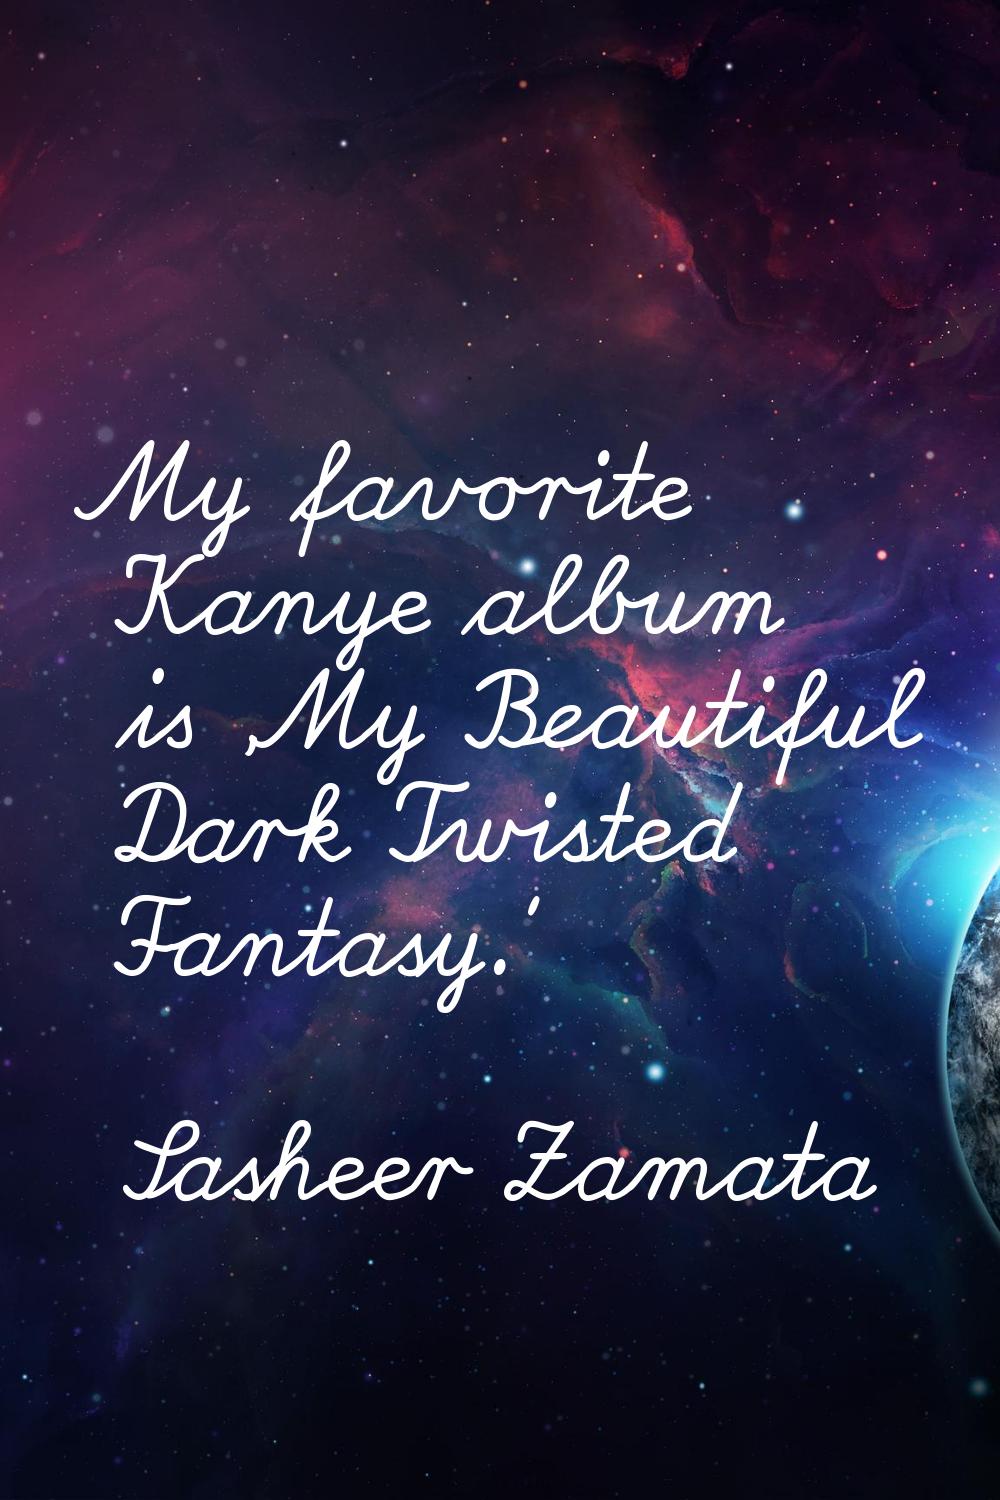 My favorite Kanye album is 'My Beautiful Dark Twisted Fantasy.'